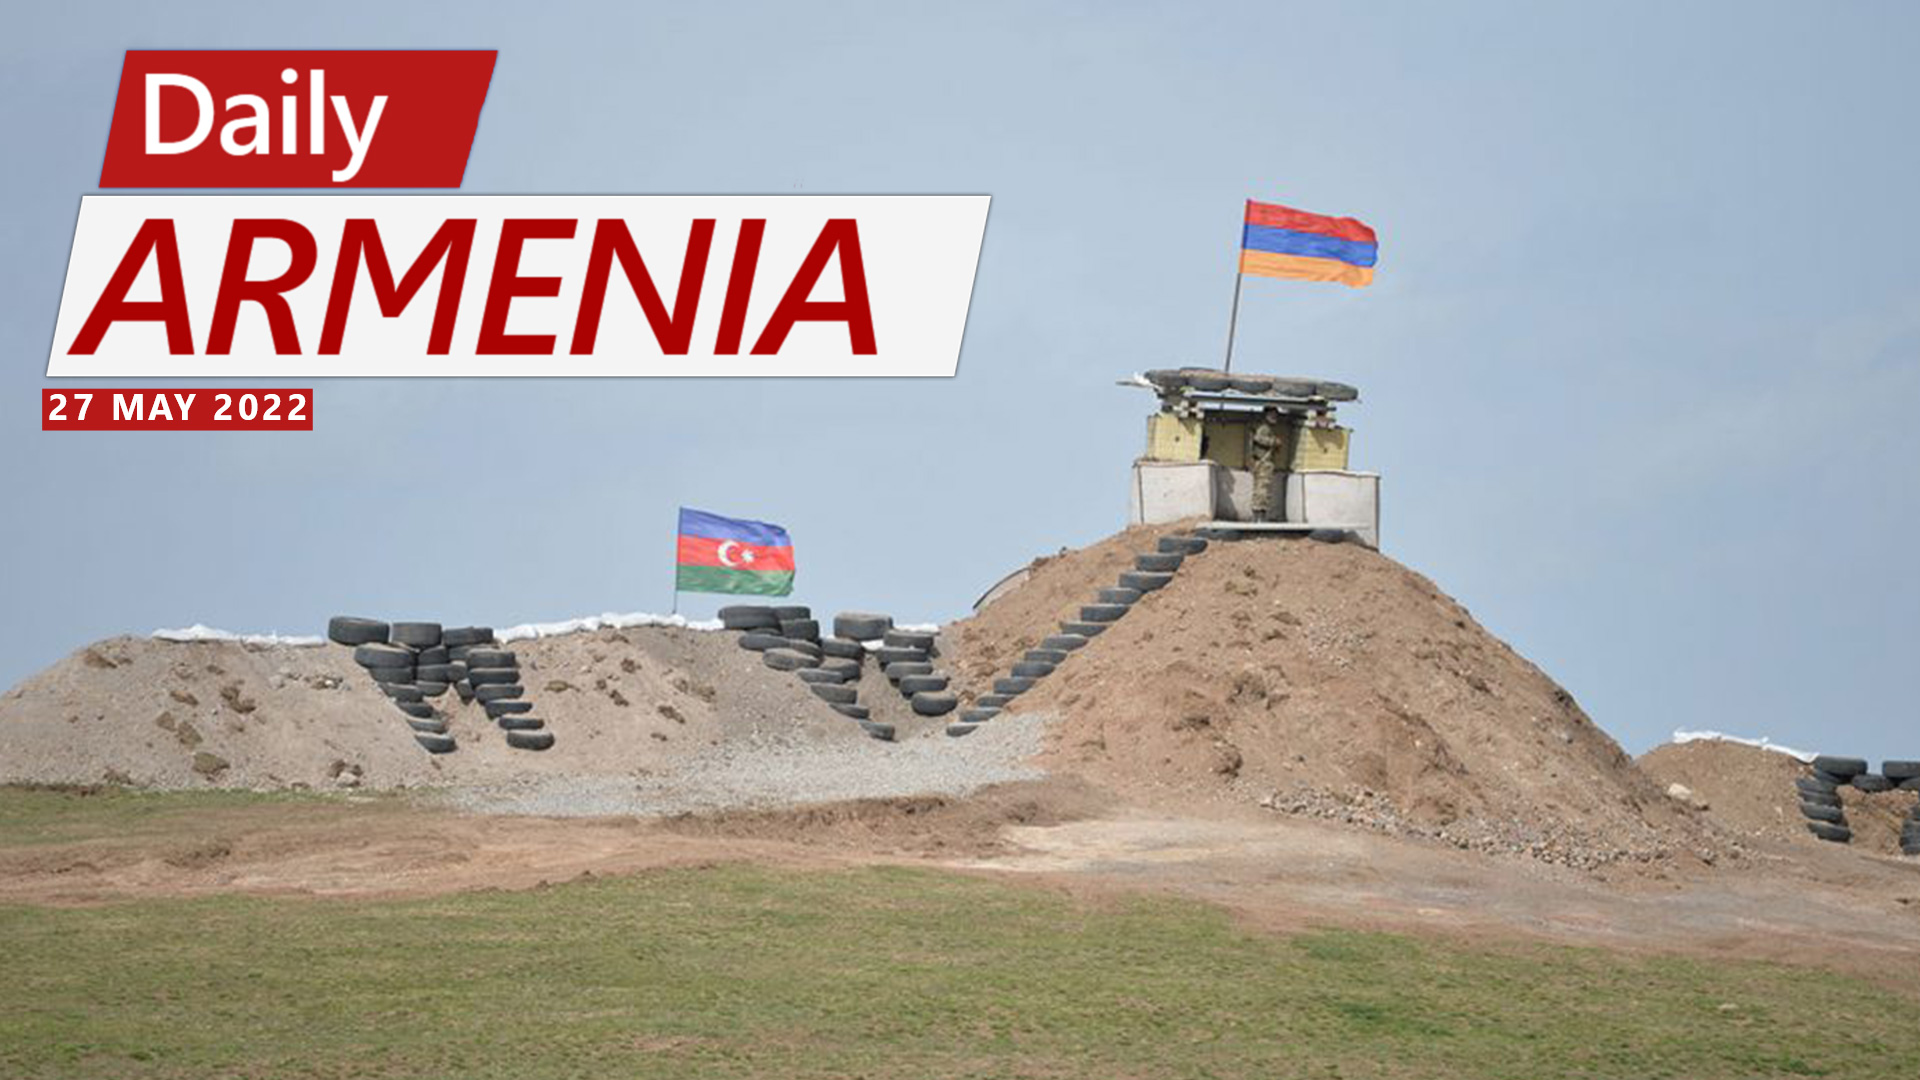 Border commission meeting with Azerbaijan “constructive,” Armenia says